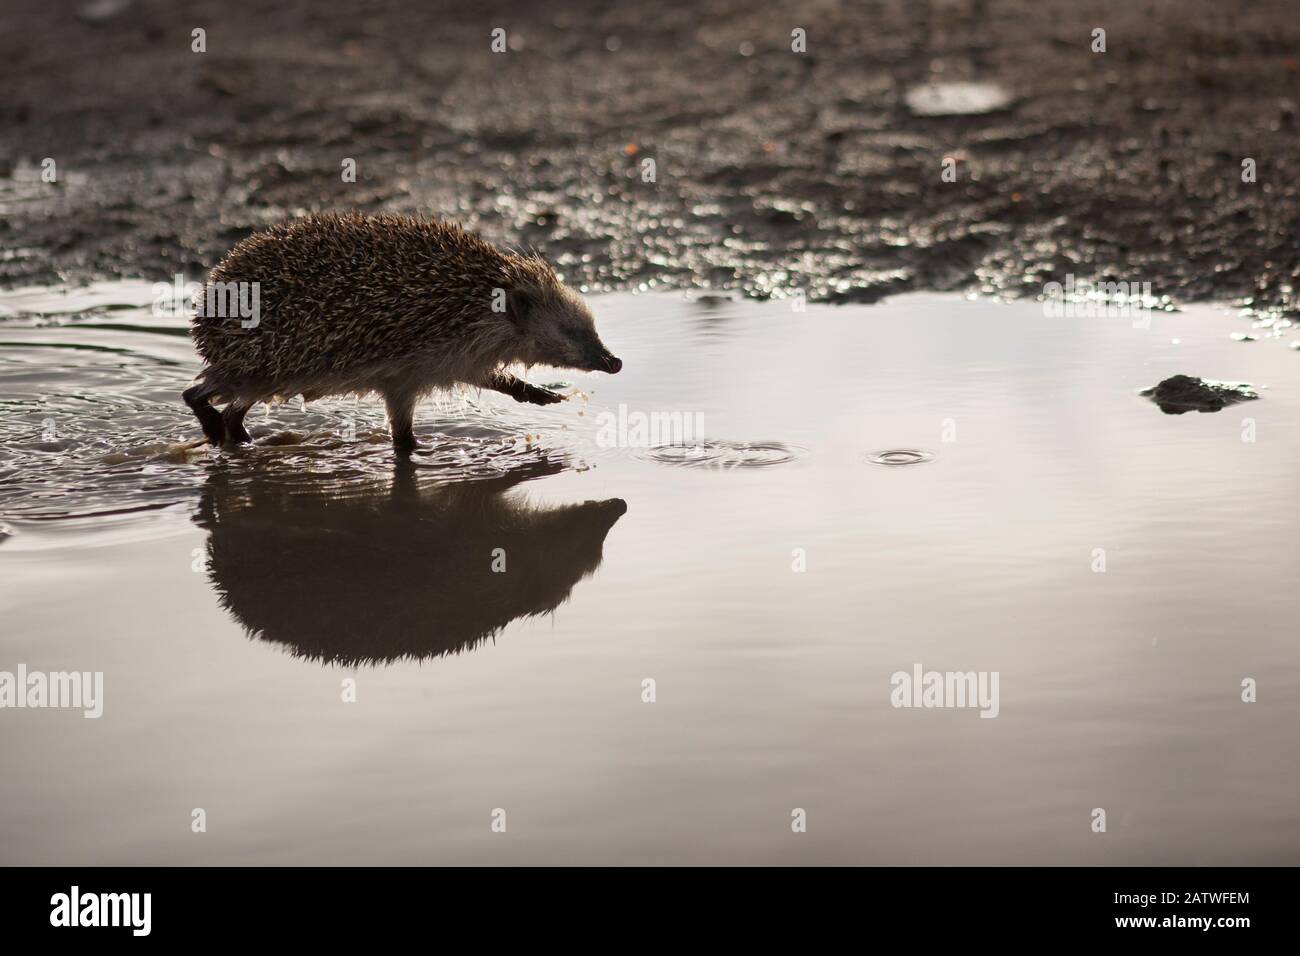 Hedgehog (Erinaceus europaeus) walking through puddle. Sado Estuary, Portugal . March Stock Photo